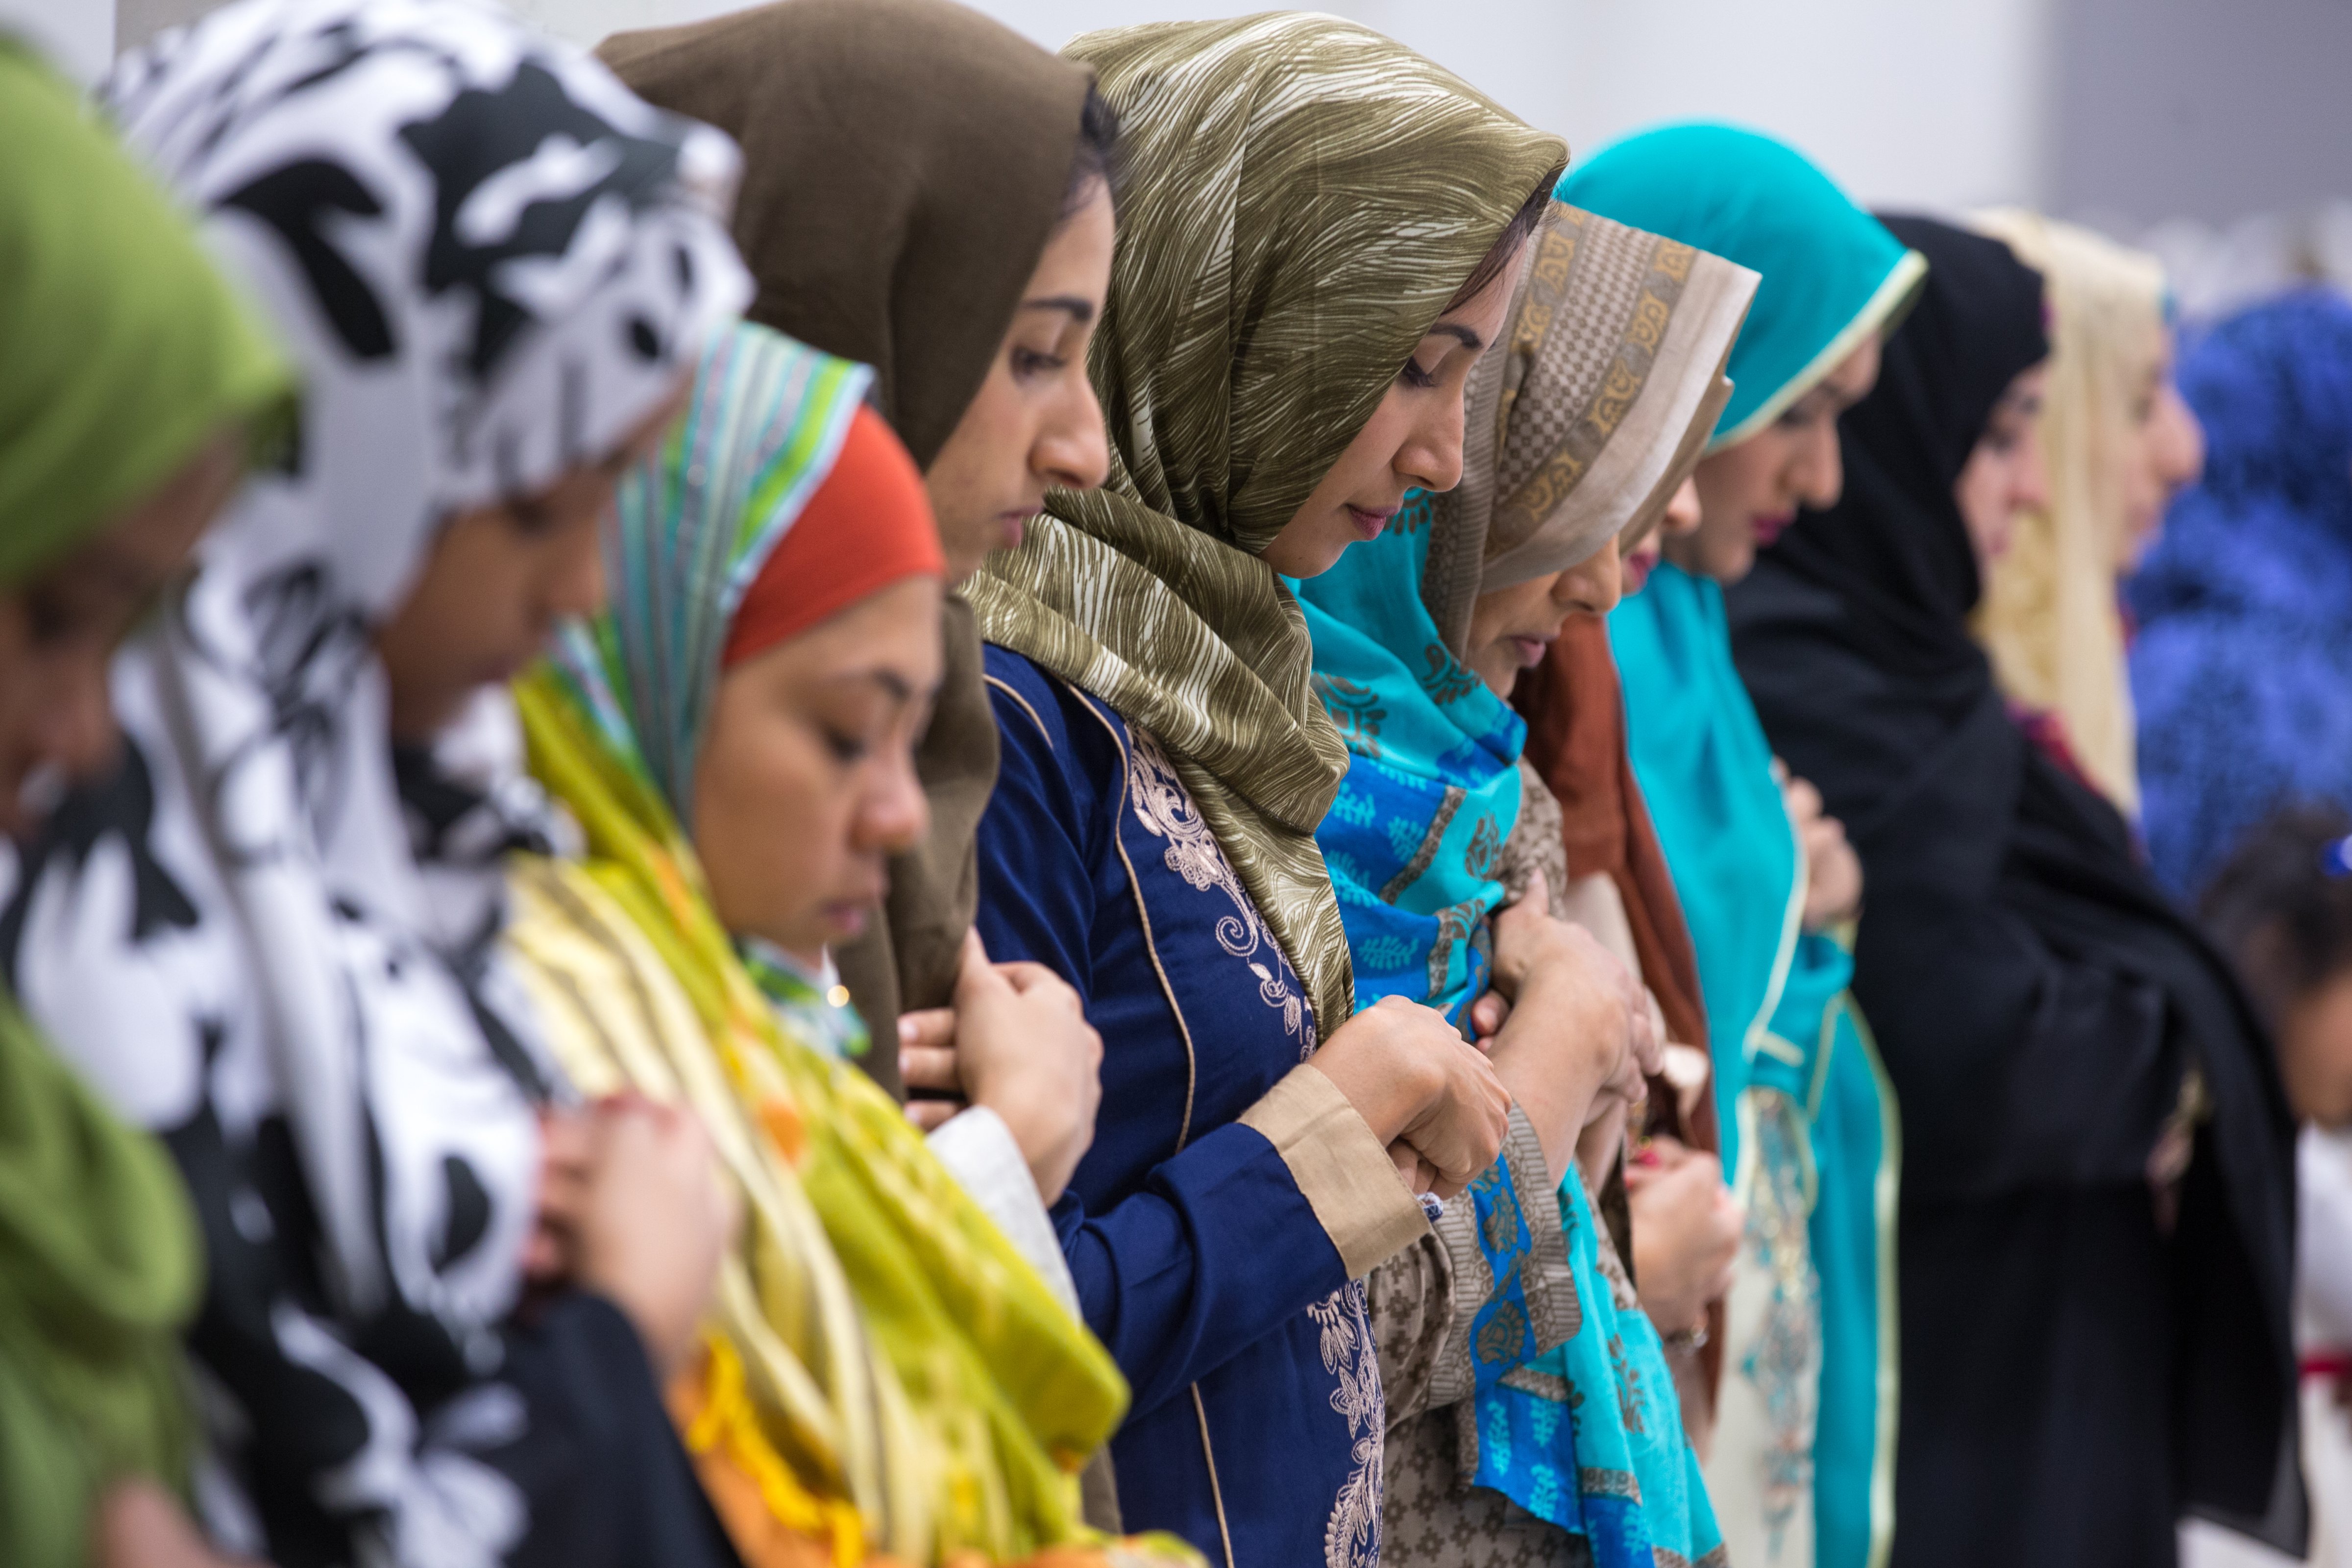 Muslims celebrate Eid al Adha in Virginia